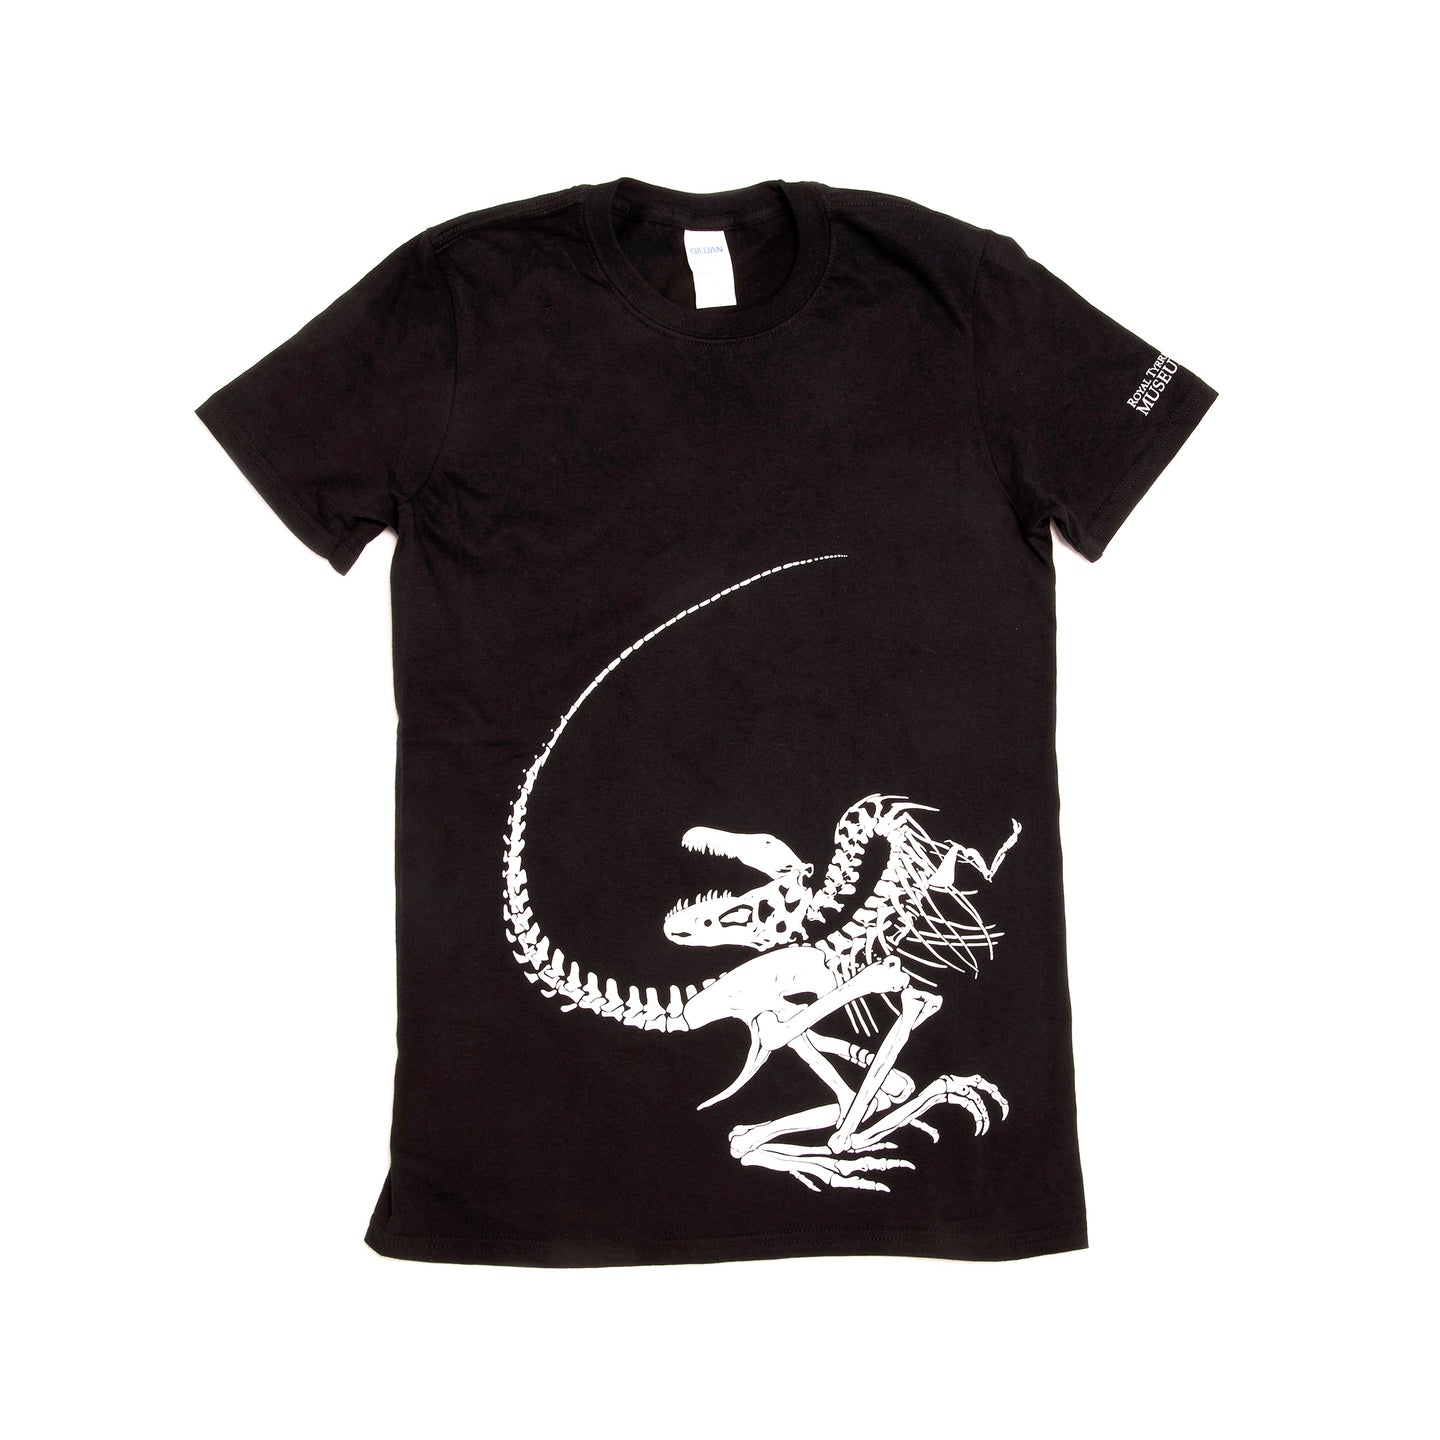 Gorgosaurus Death Pose Adult T-shirt